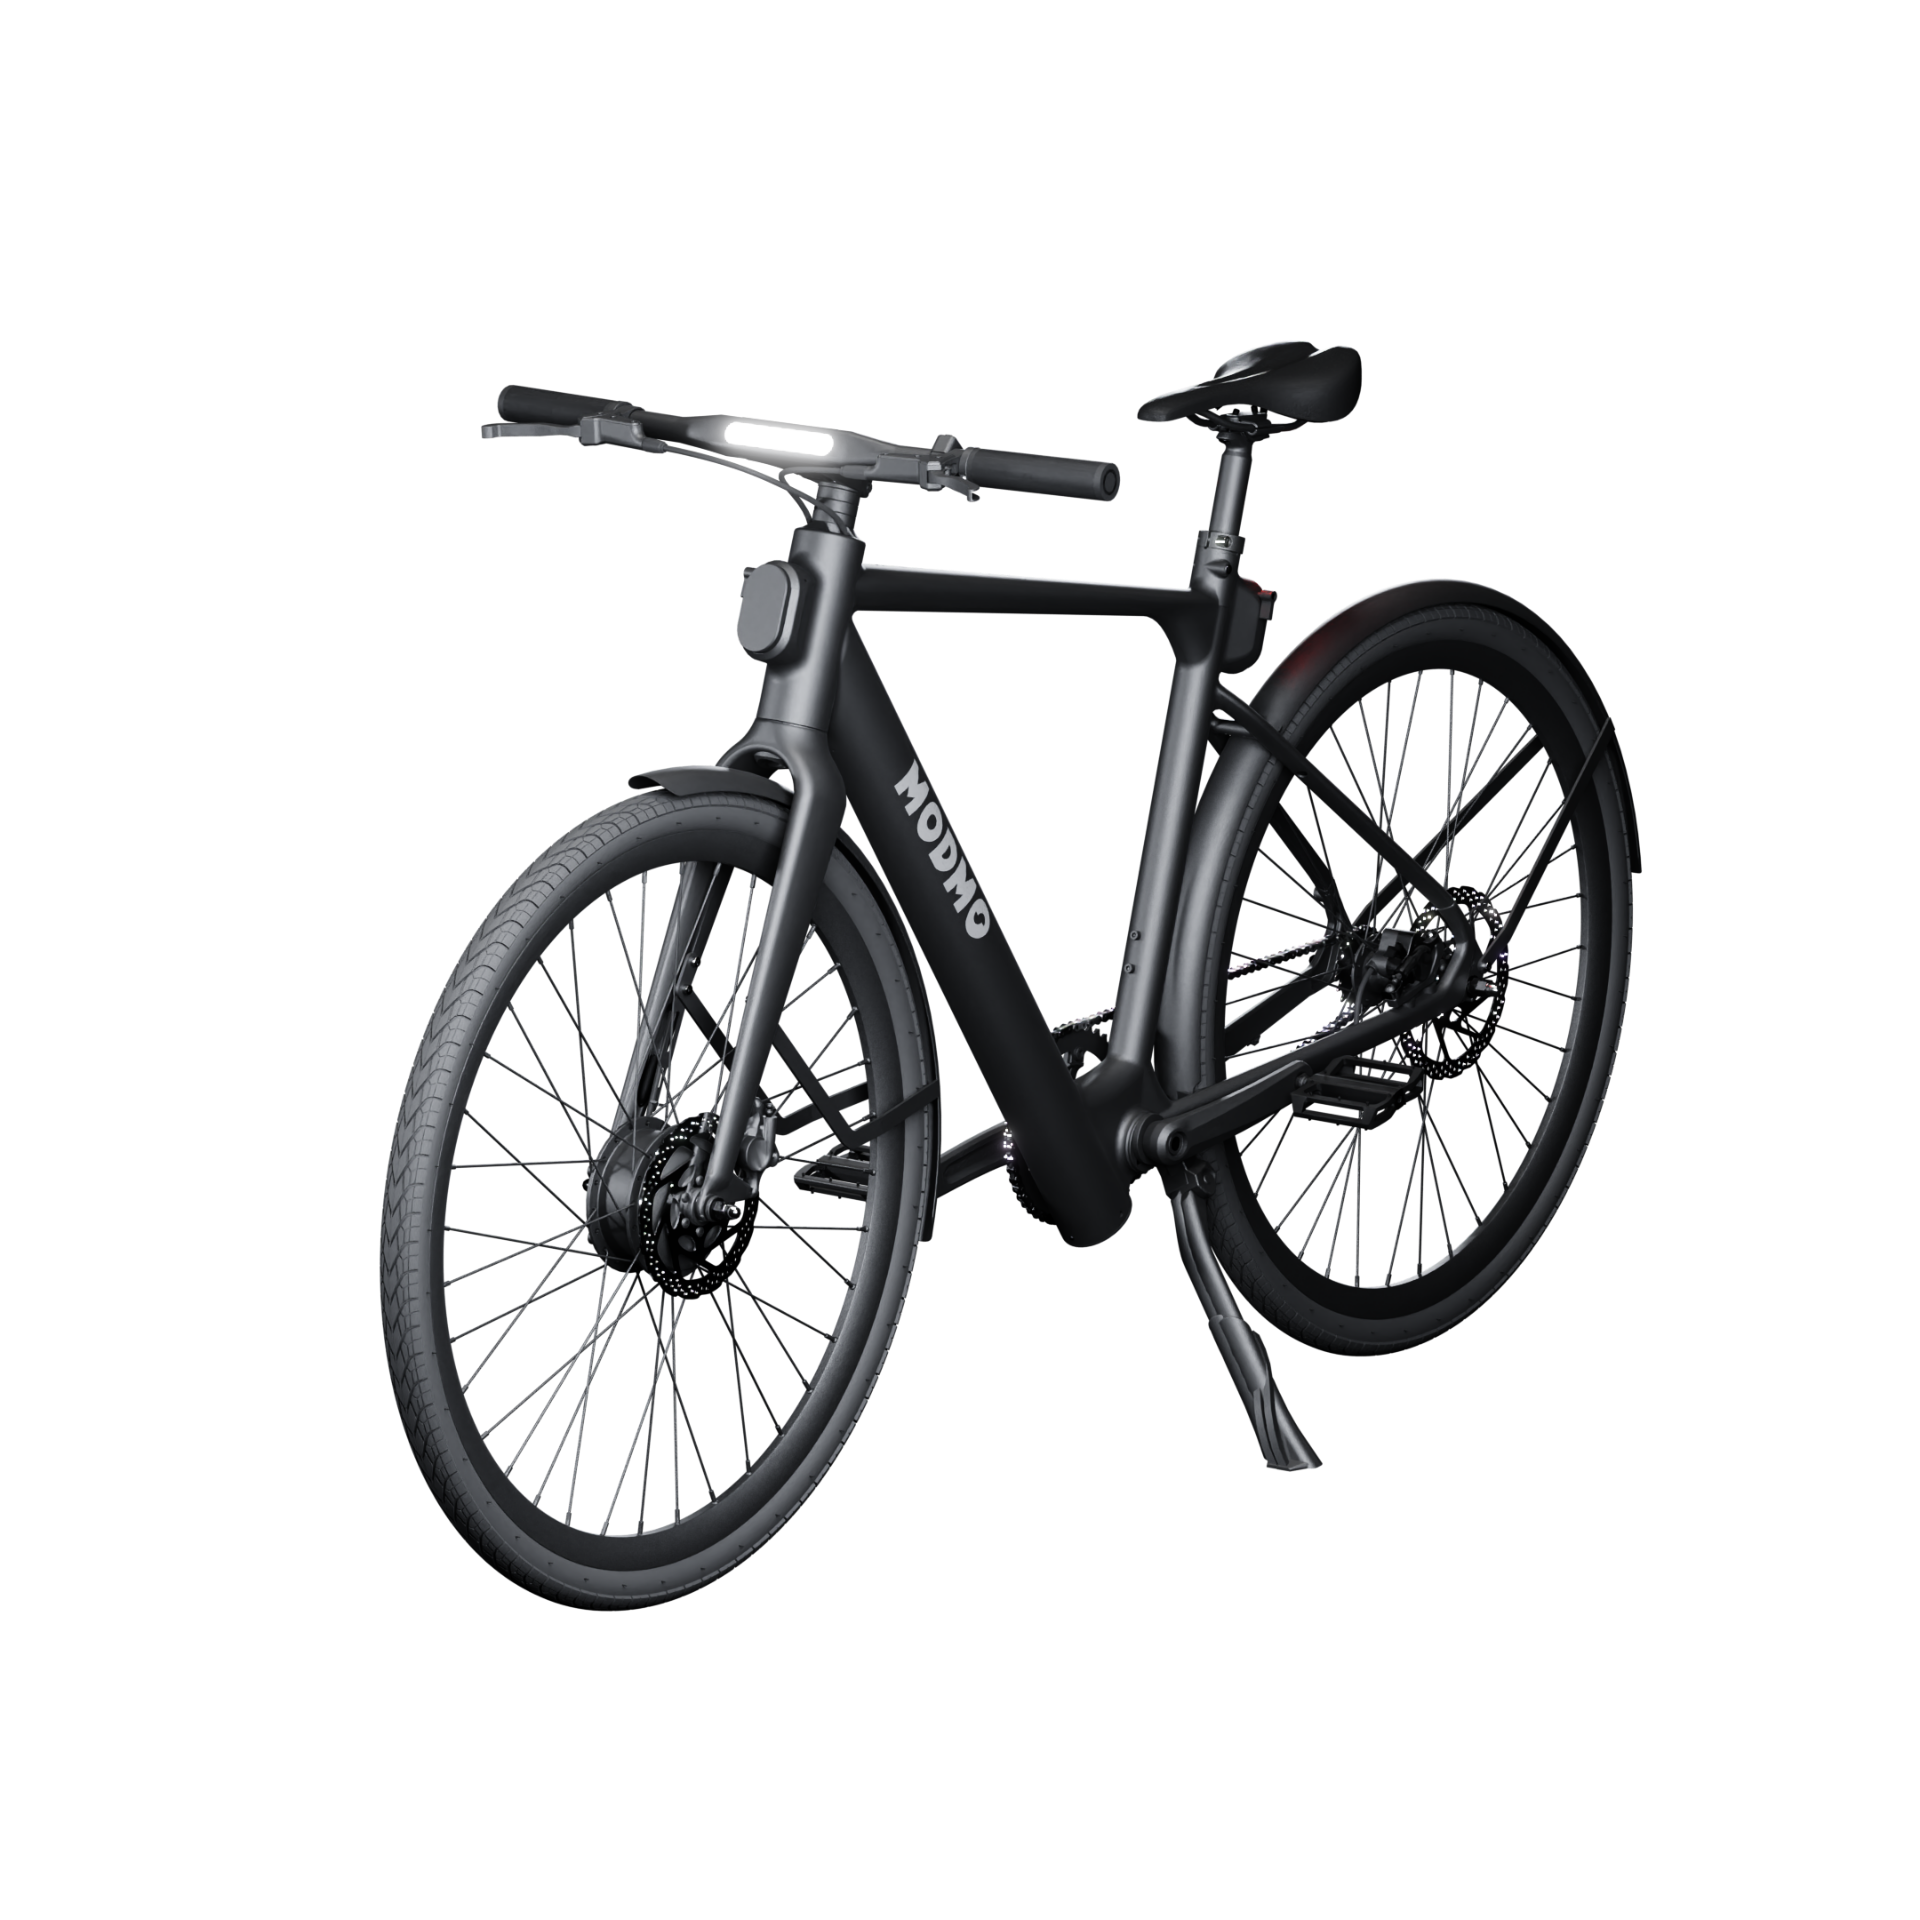 Modmo Saigon+ Electric Bicycle - RRP £2800 - Size S (Rider: 140-155cm) - Image 20 of 20